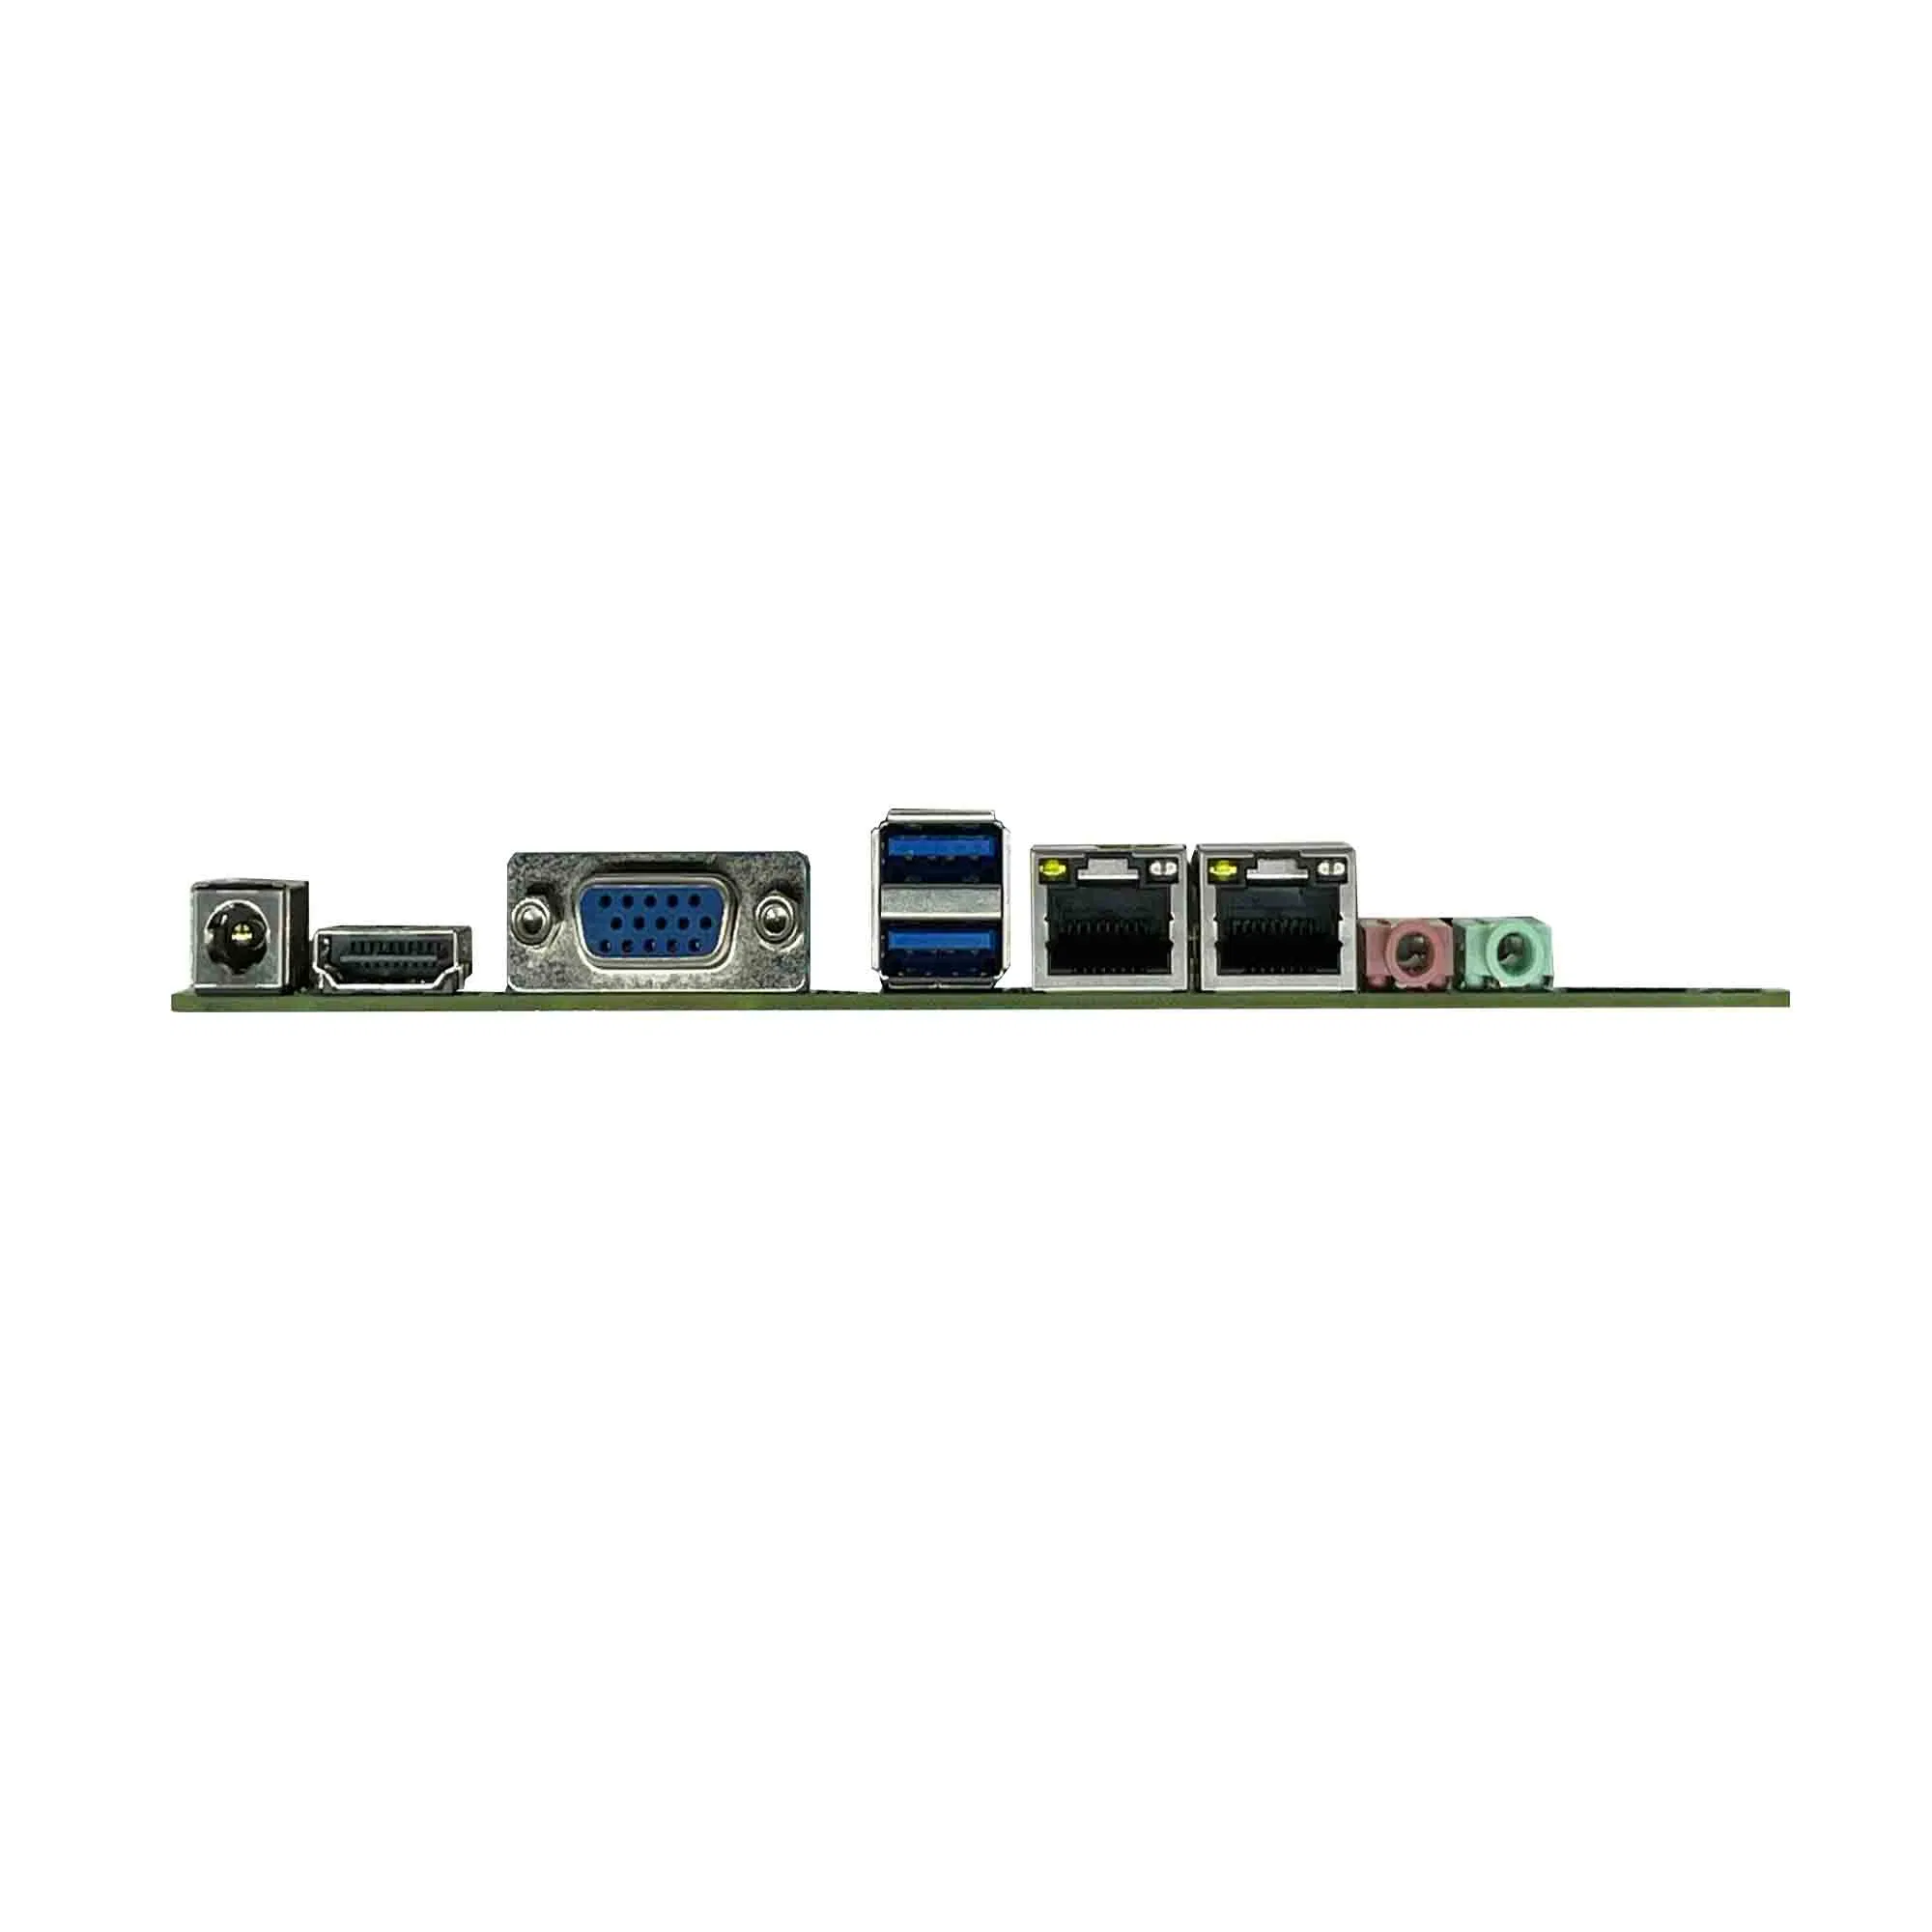 Dual Core i5 4300u 6 COM 2 LAN Thin Mini Placa base ITX POS